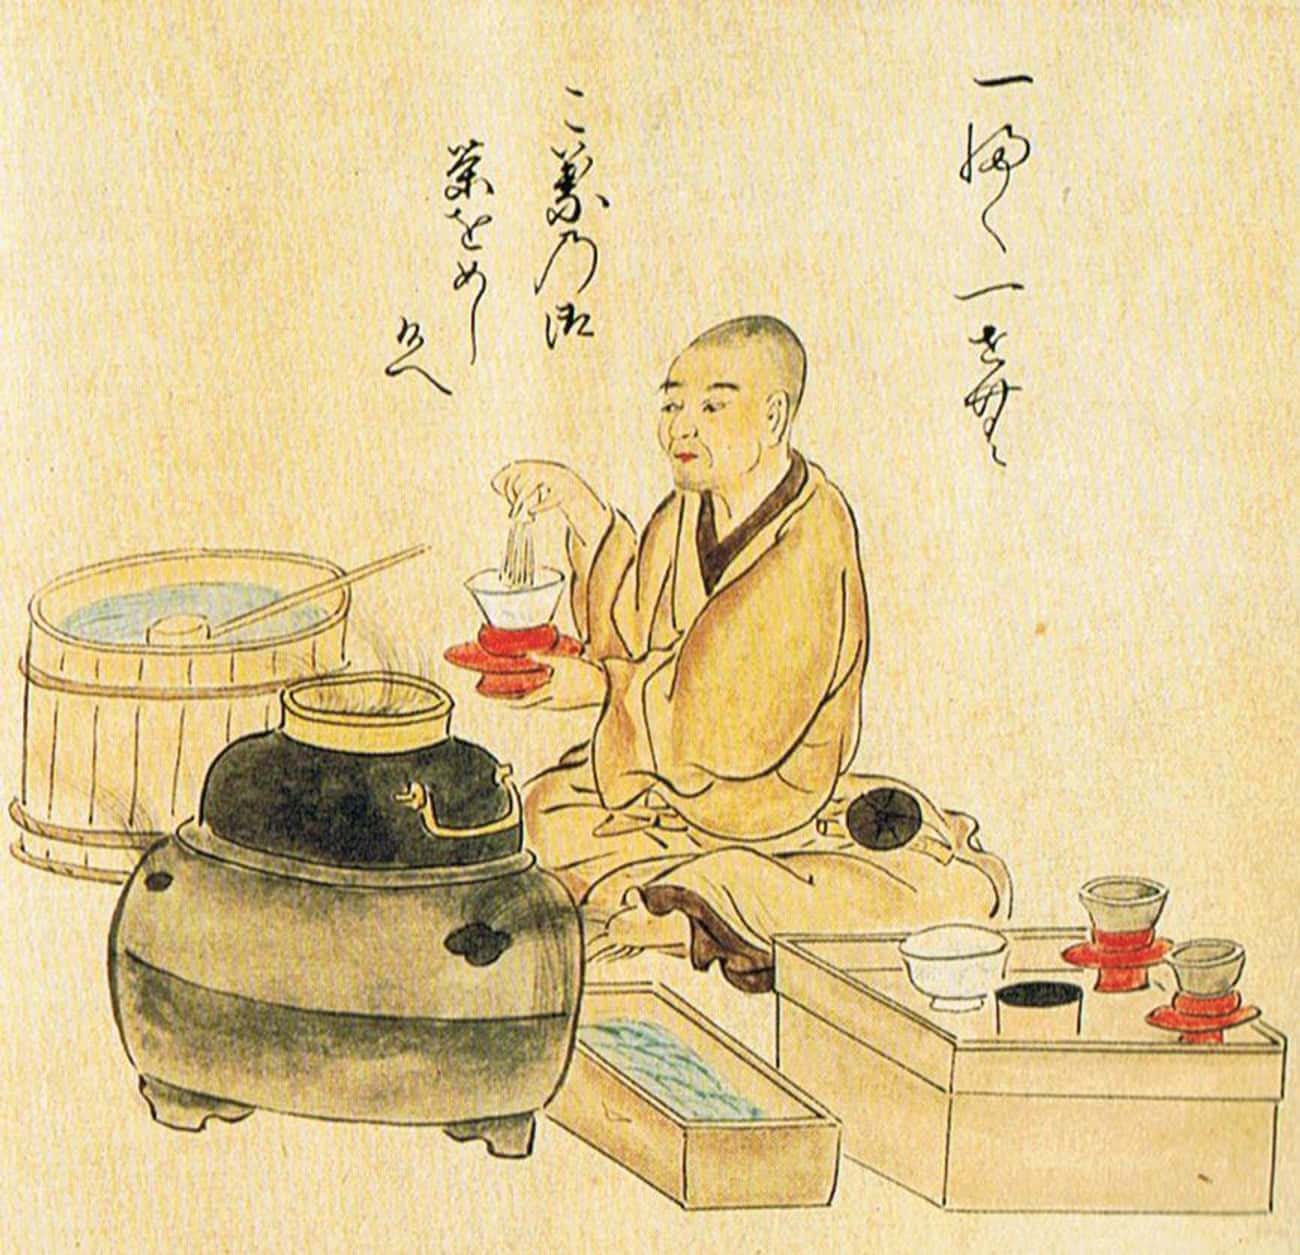 Tea Ceremonies Were Political And Spiritual For Samurai